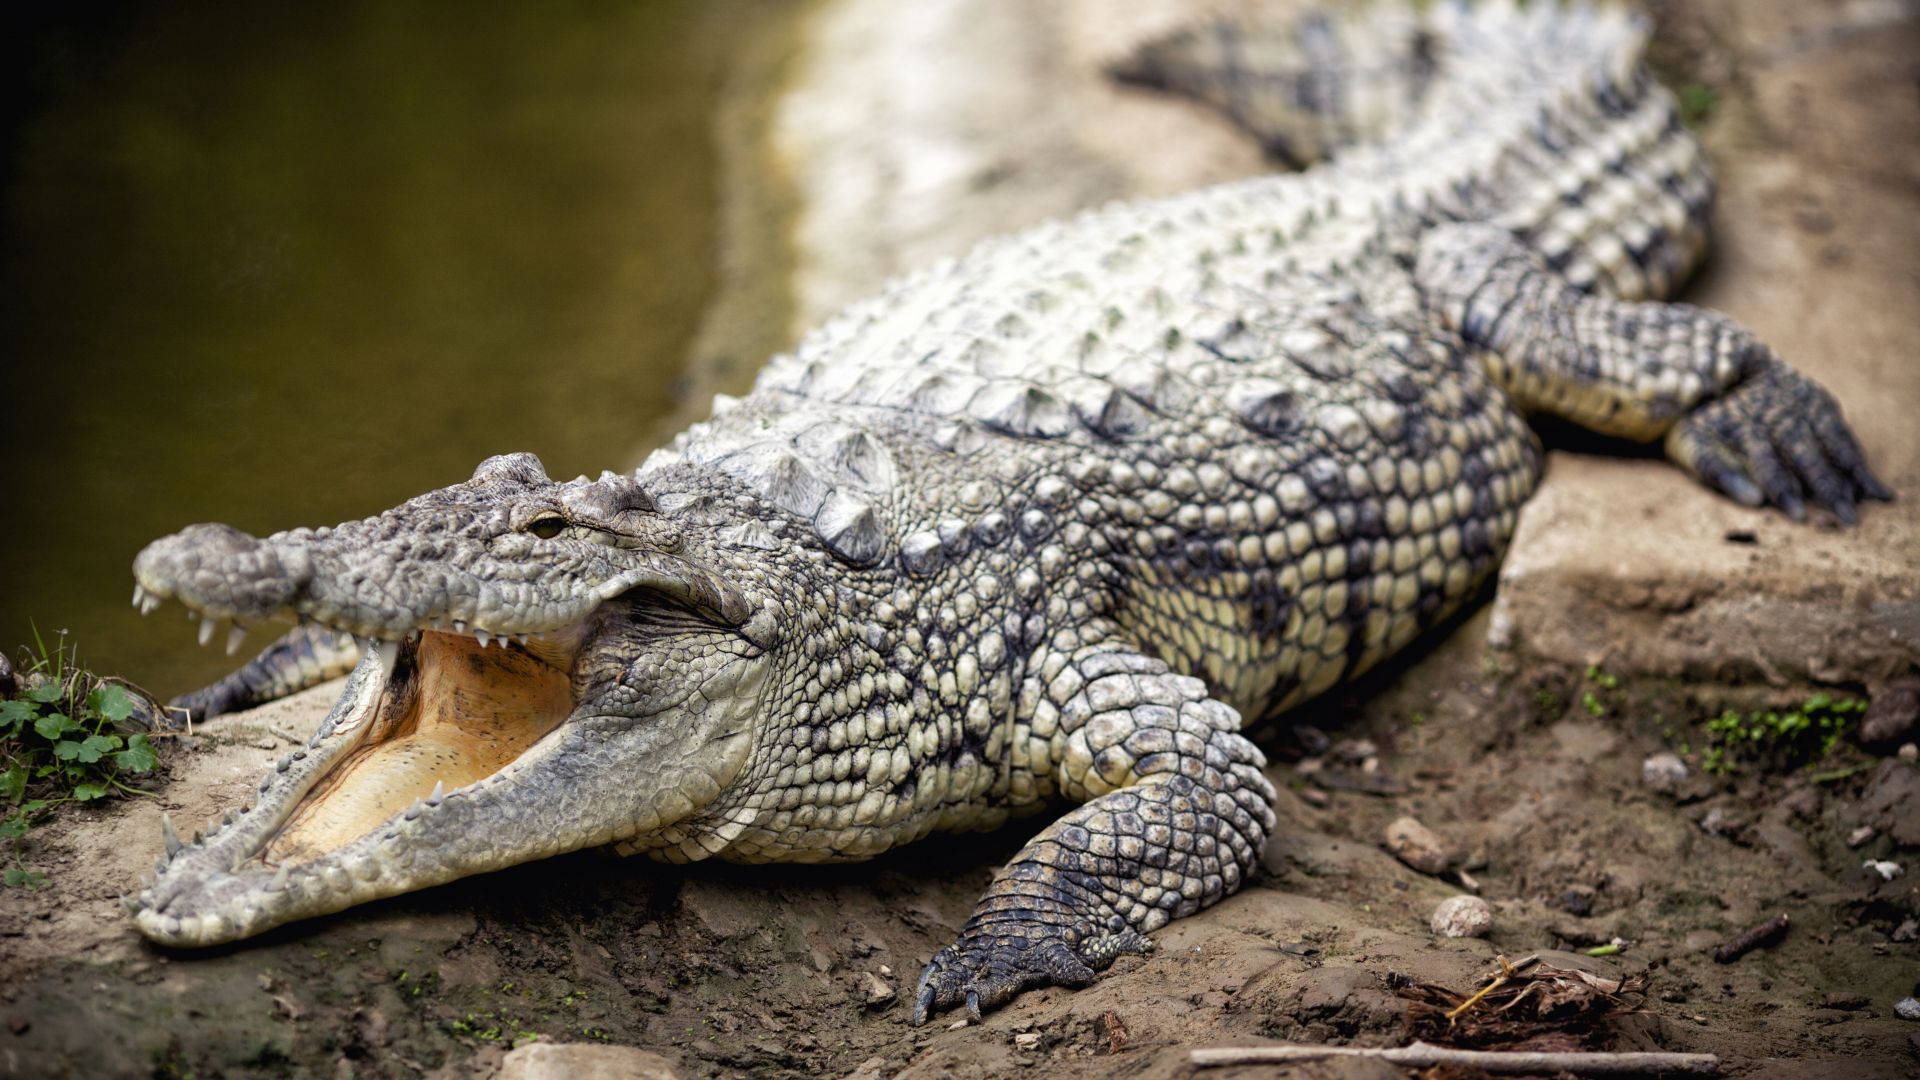 Откриха болен алигатор в обществен парк в Ню Йорк